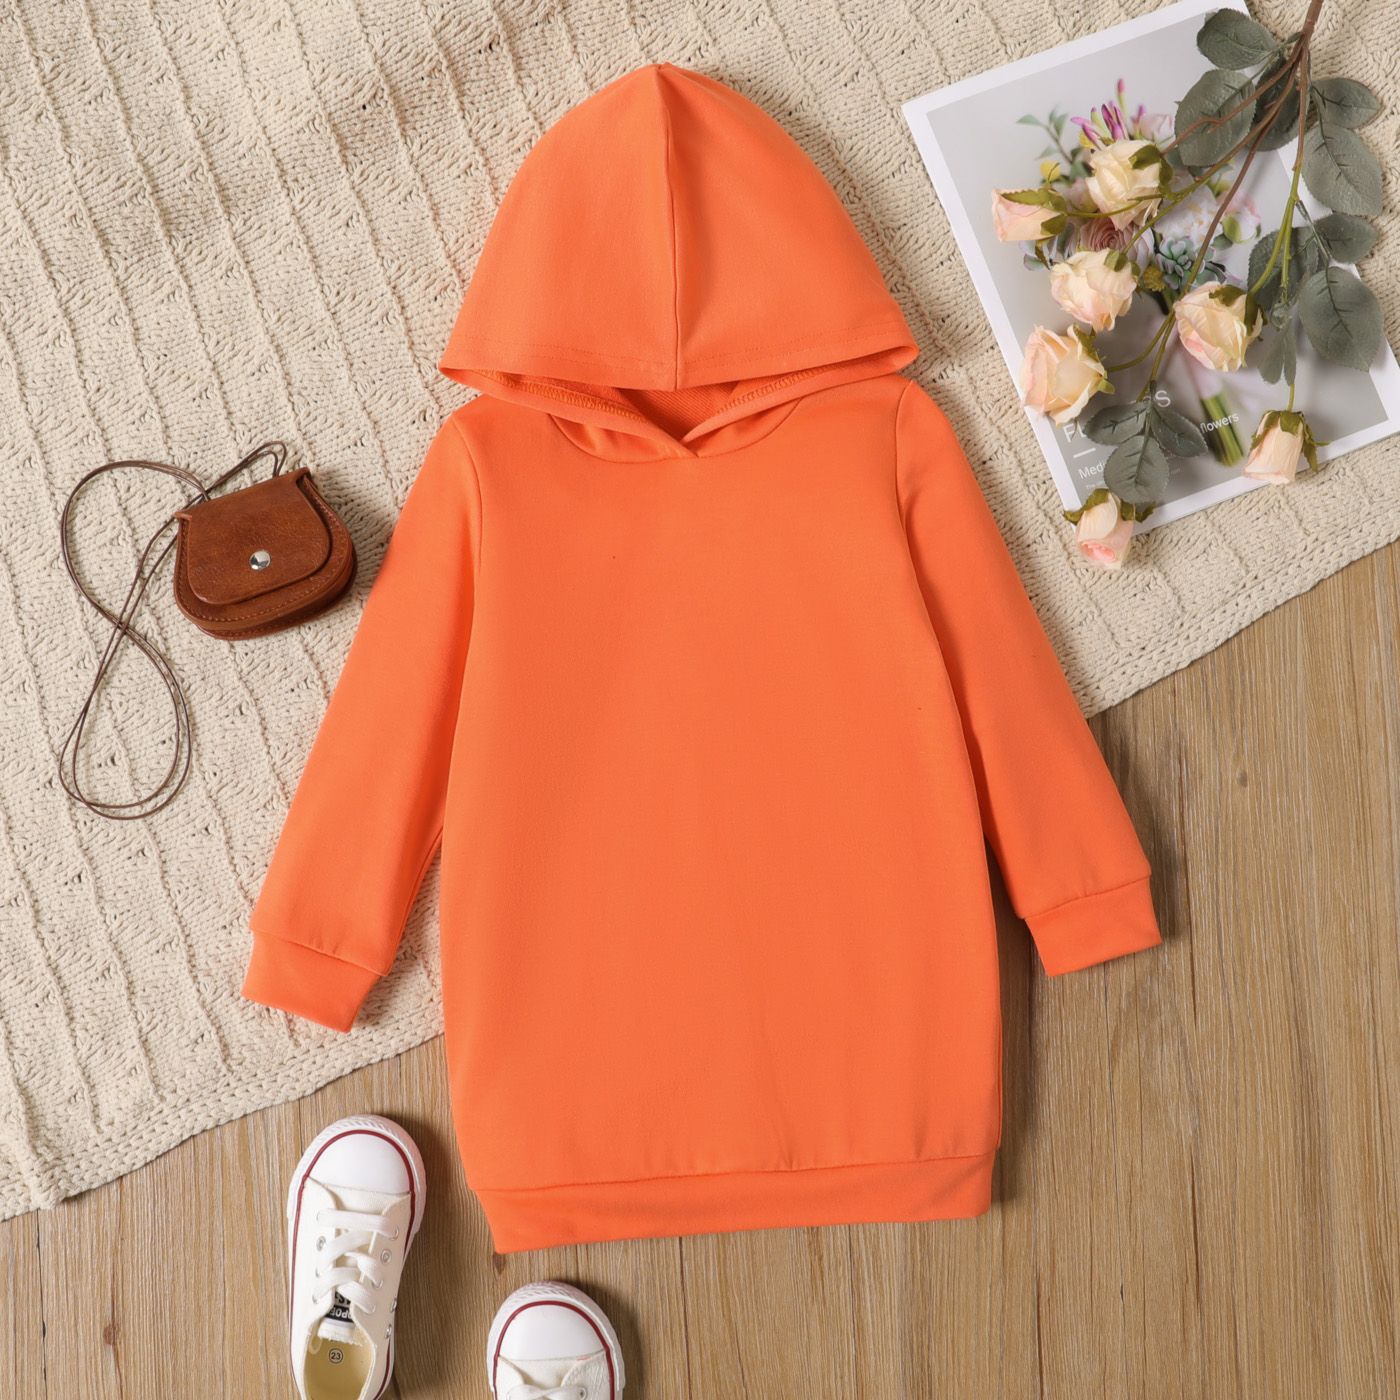 Toddler Girl Solid Color Long-sleeve Hooded Sweatshirt Dress